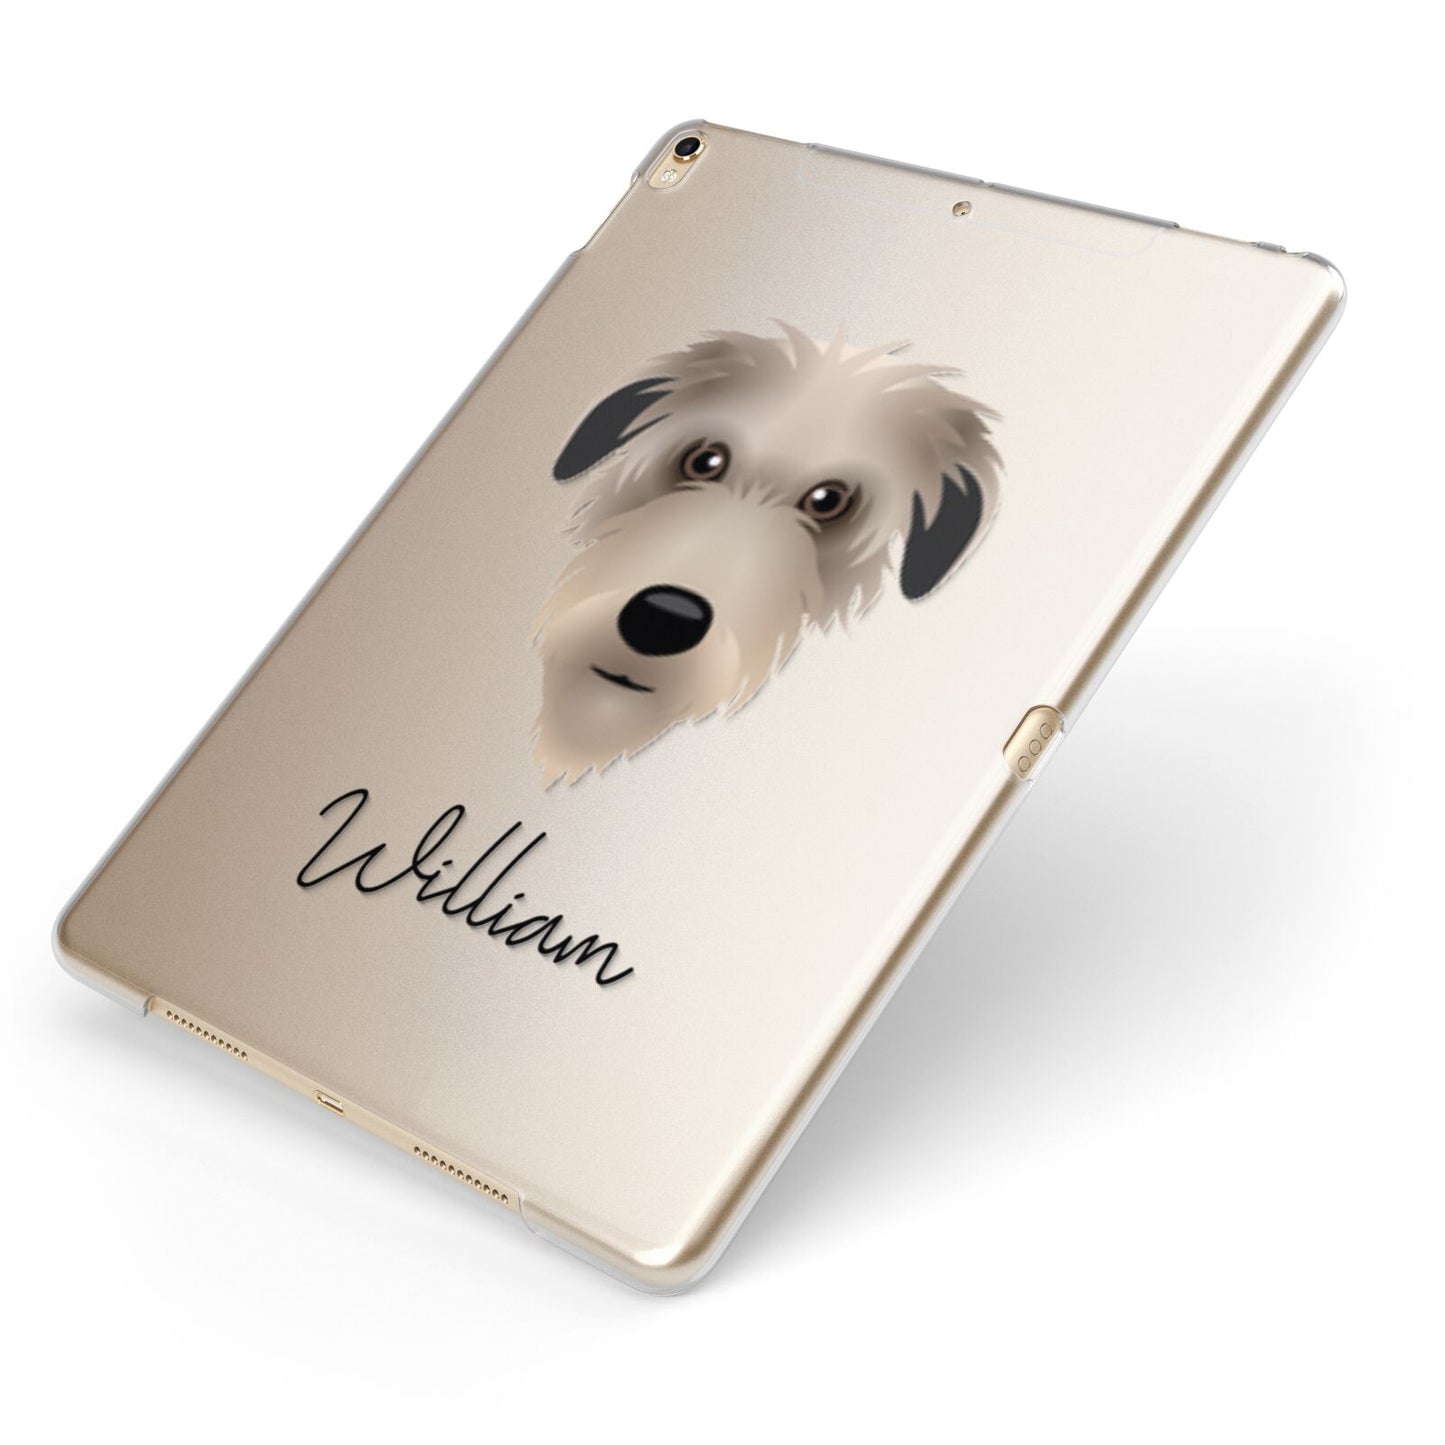 Deerhound Personalised Apple iPad Case on Gold iPad Side View